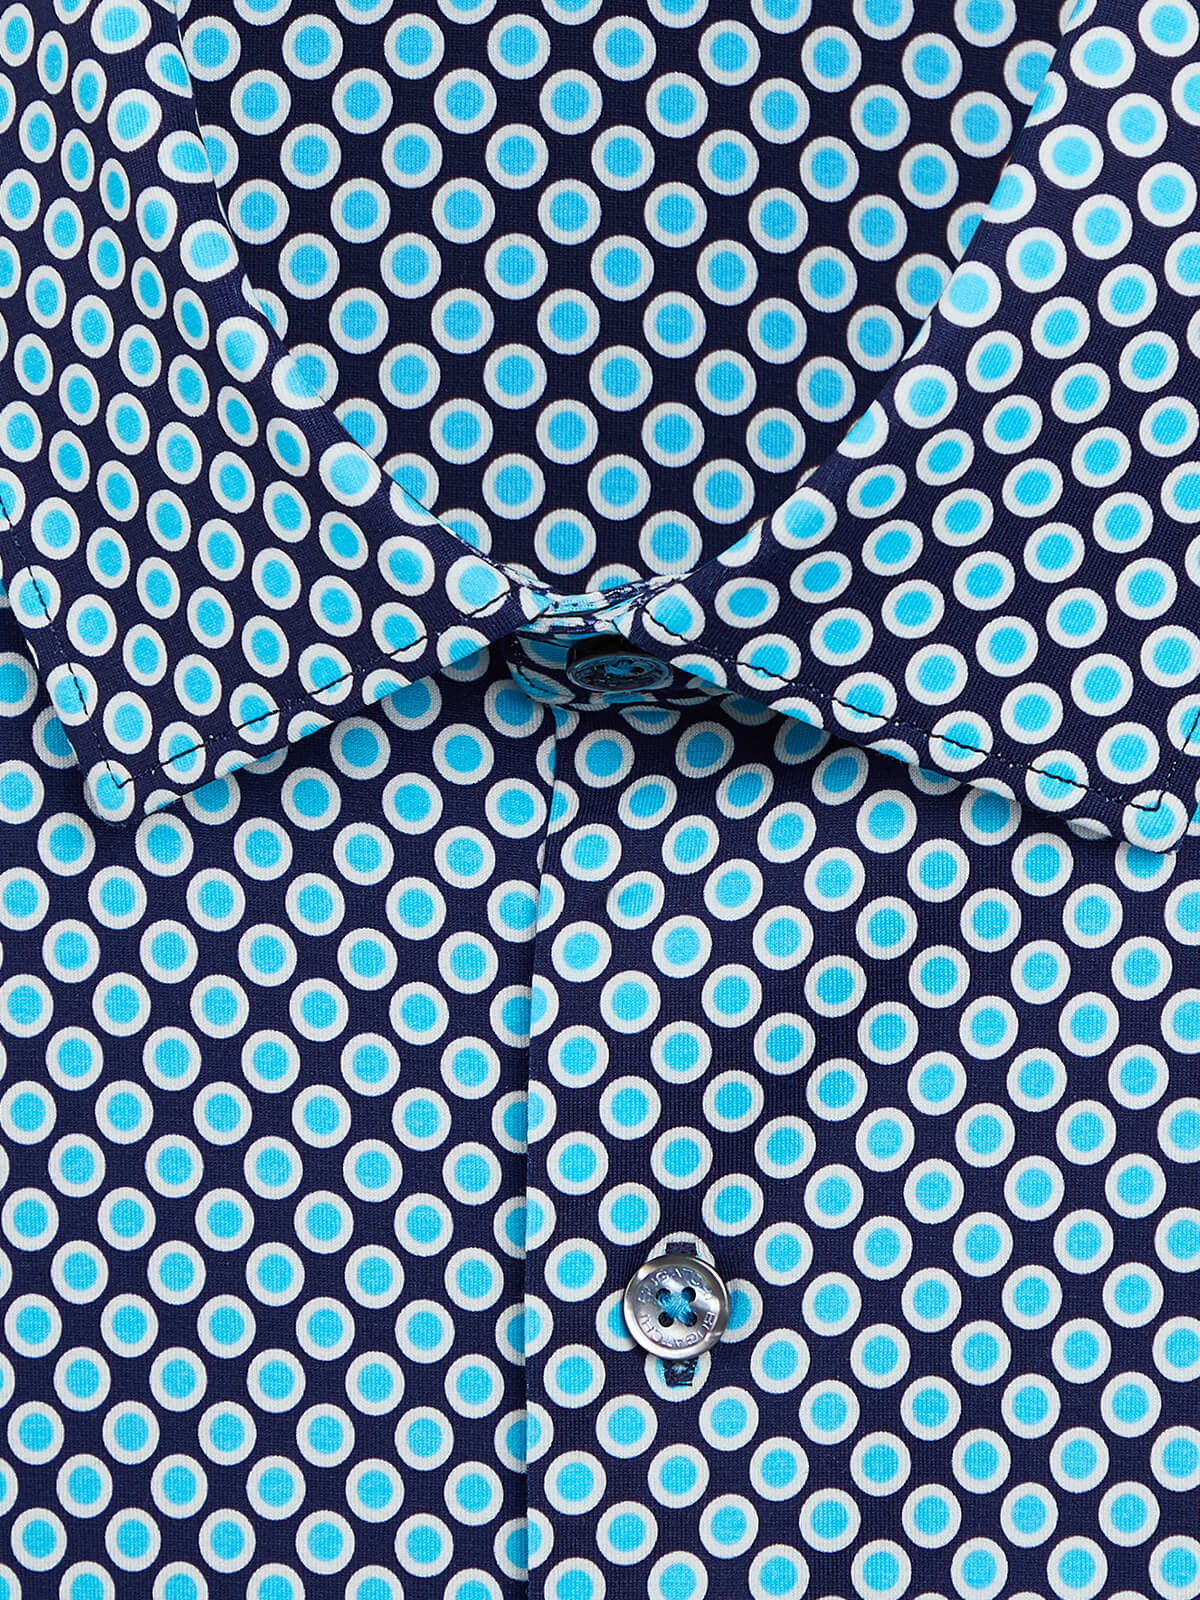 OoohCotton Tech Long Sleeve Shirt - Aqua Circle Print